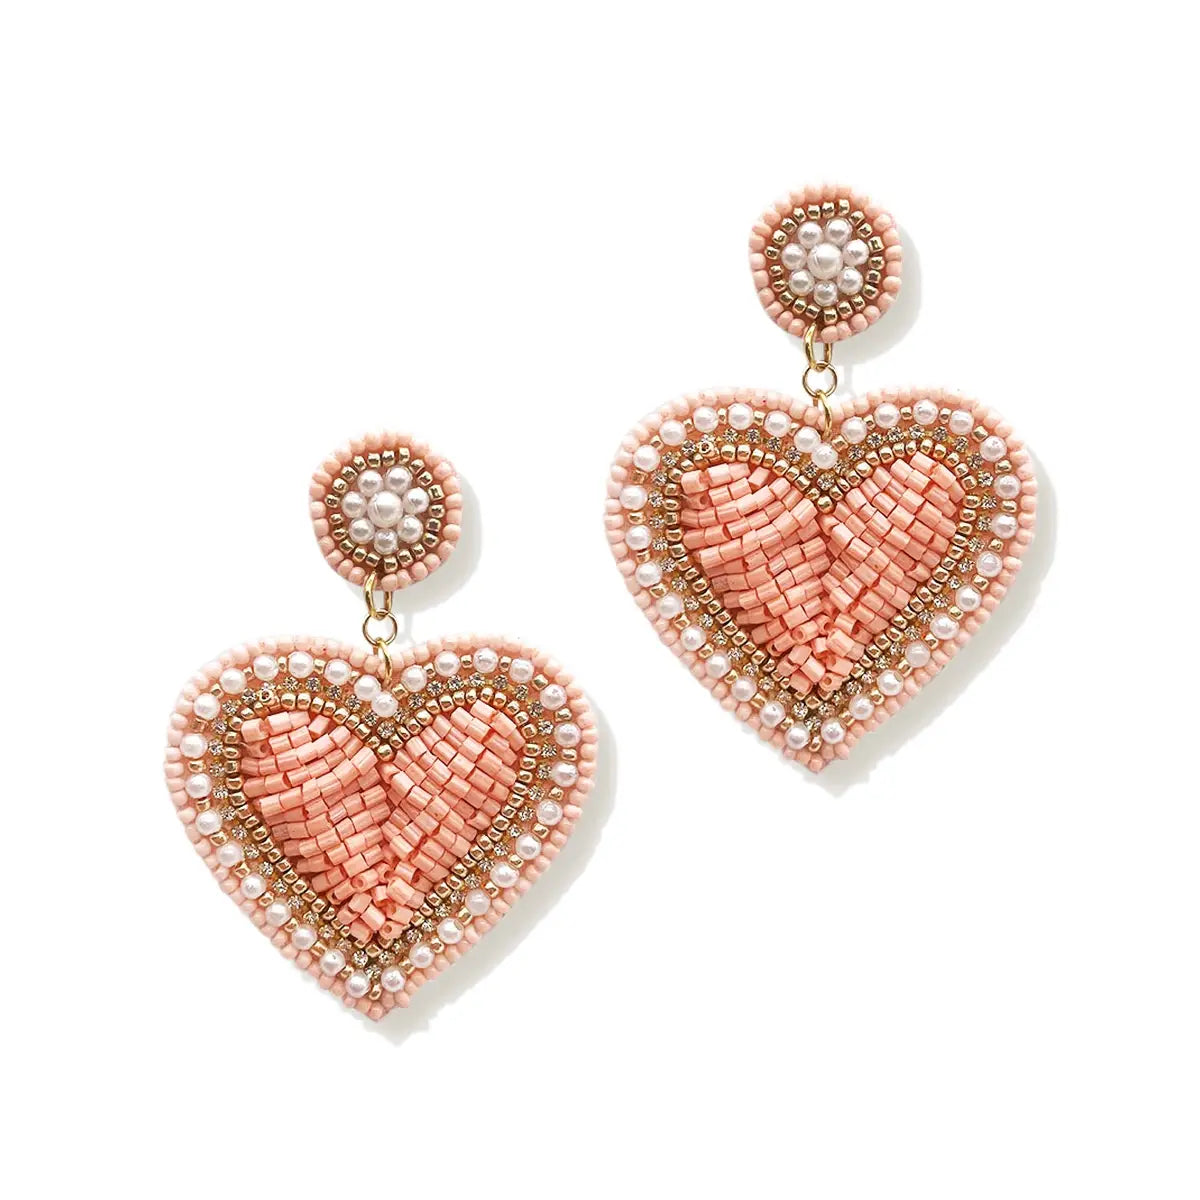 Peachy Heart Earrings